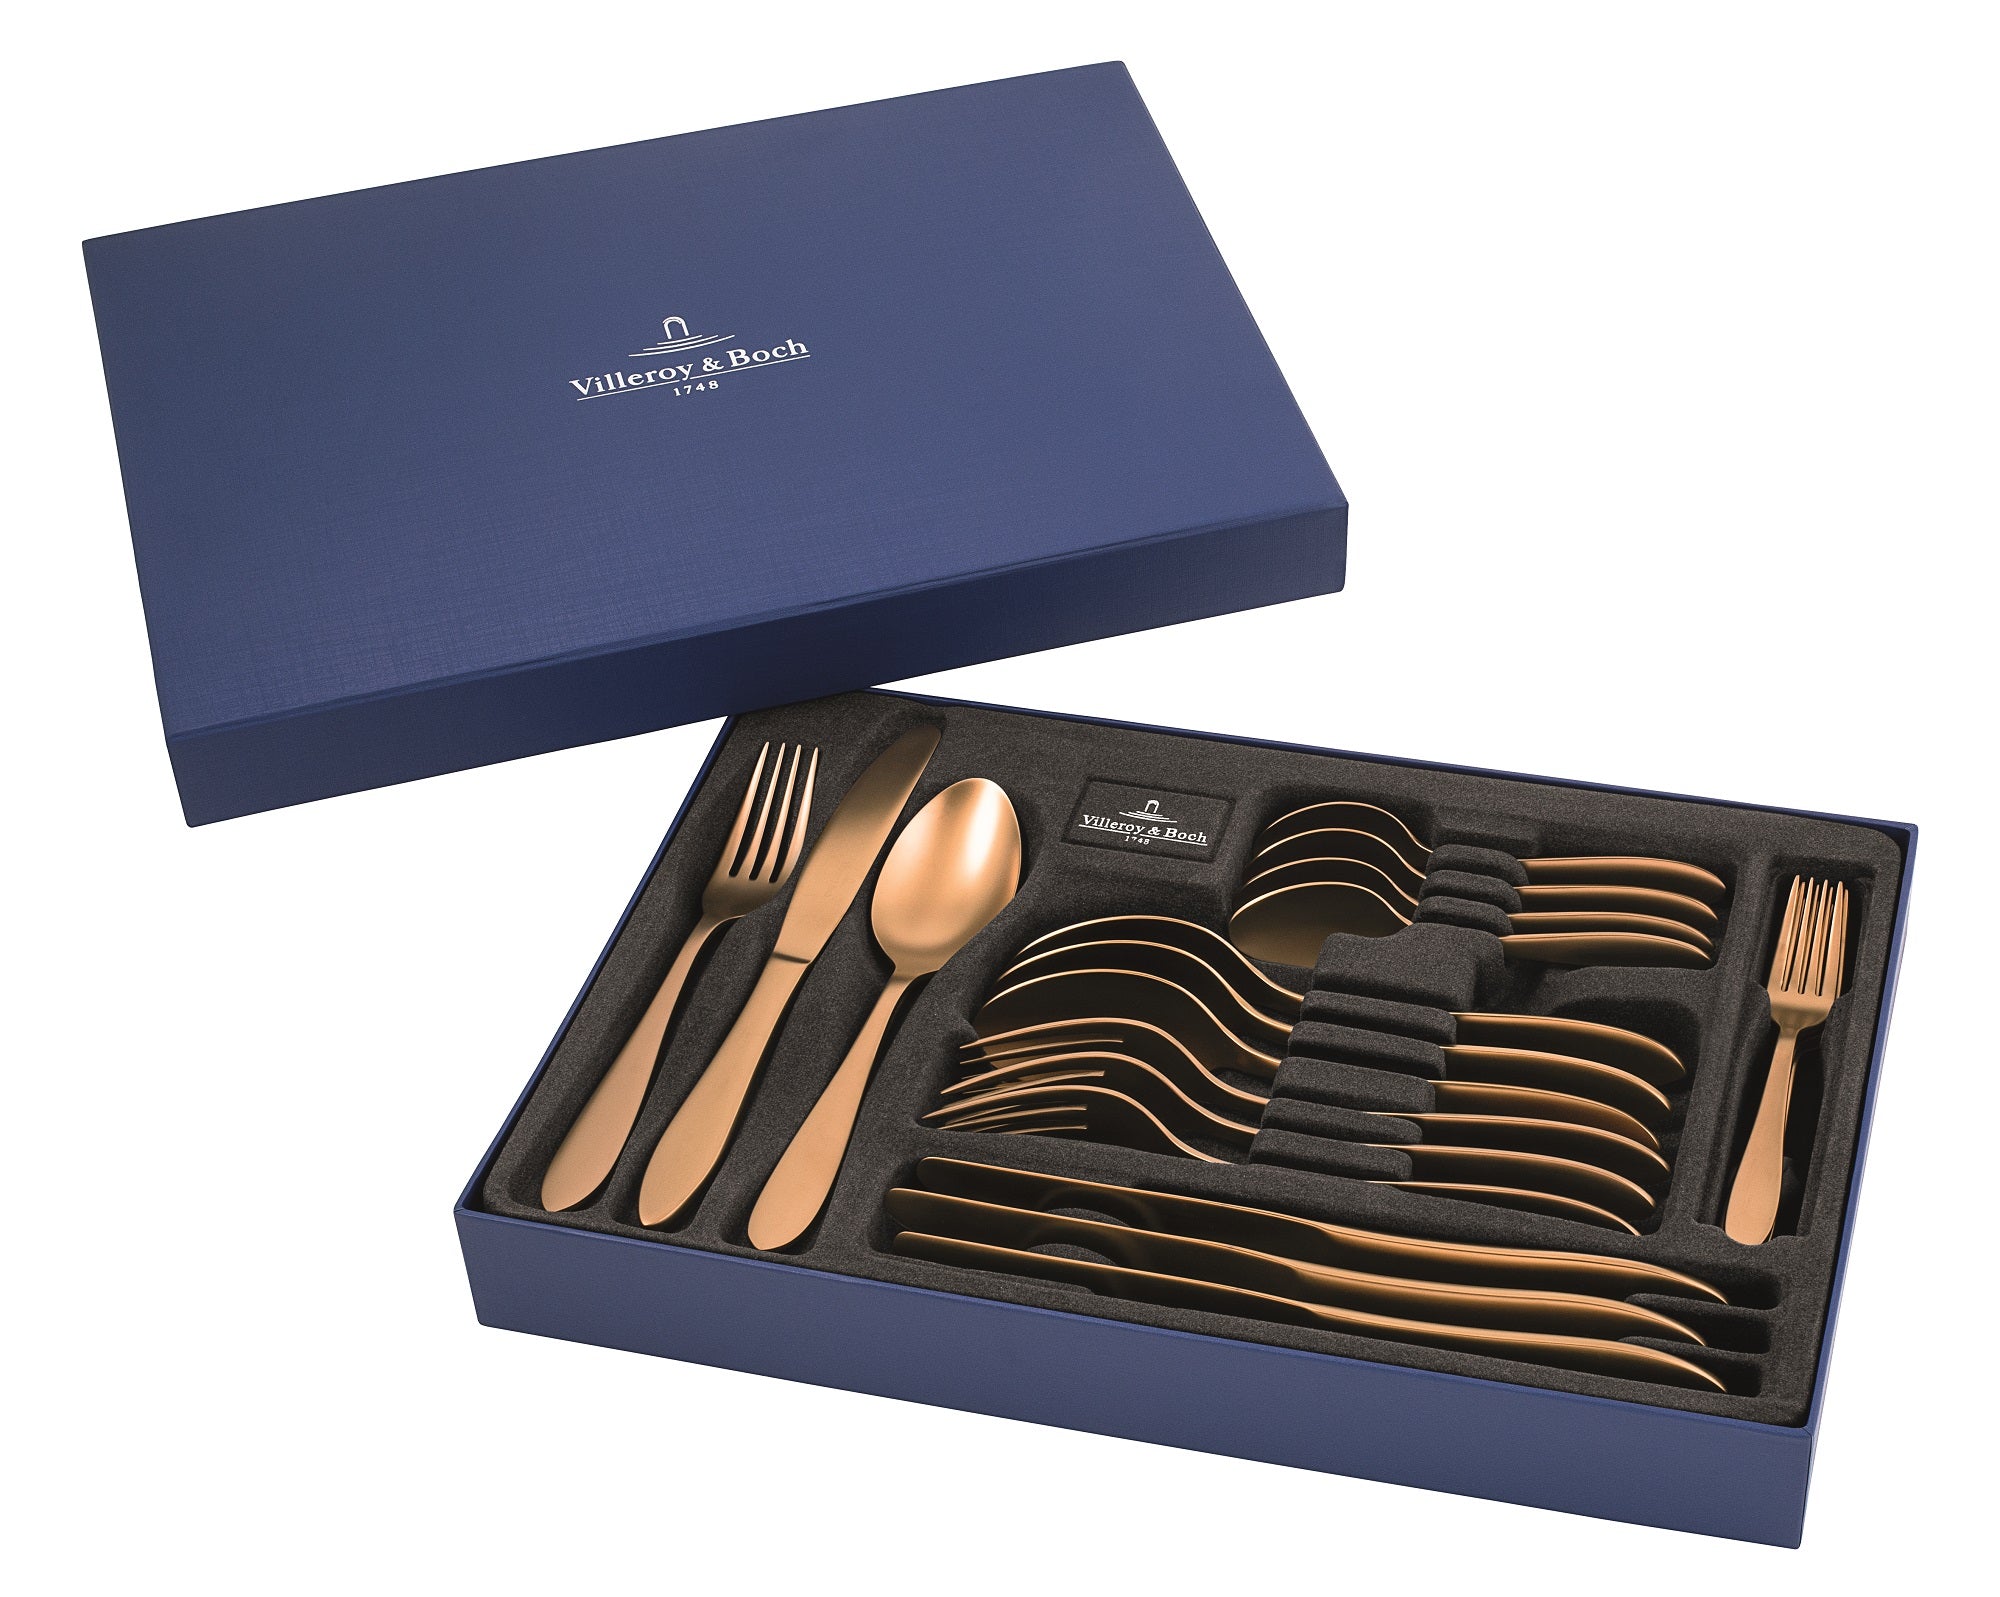 Villeroy & Boch Manufacture Cutlery posate da tavola 20 pezzi — Locatelli  House Store